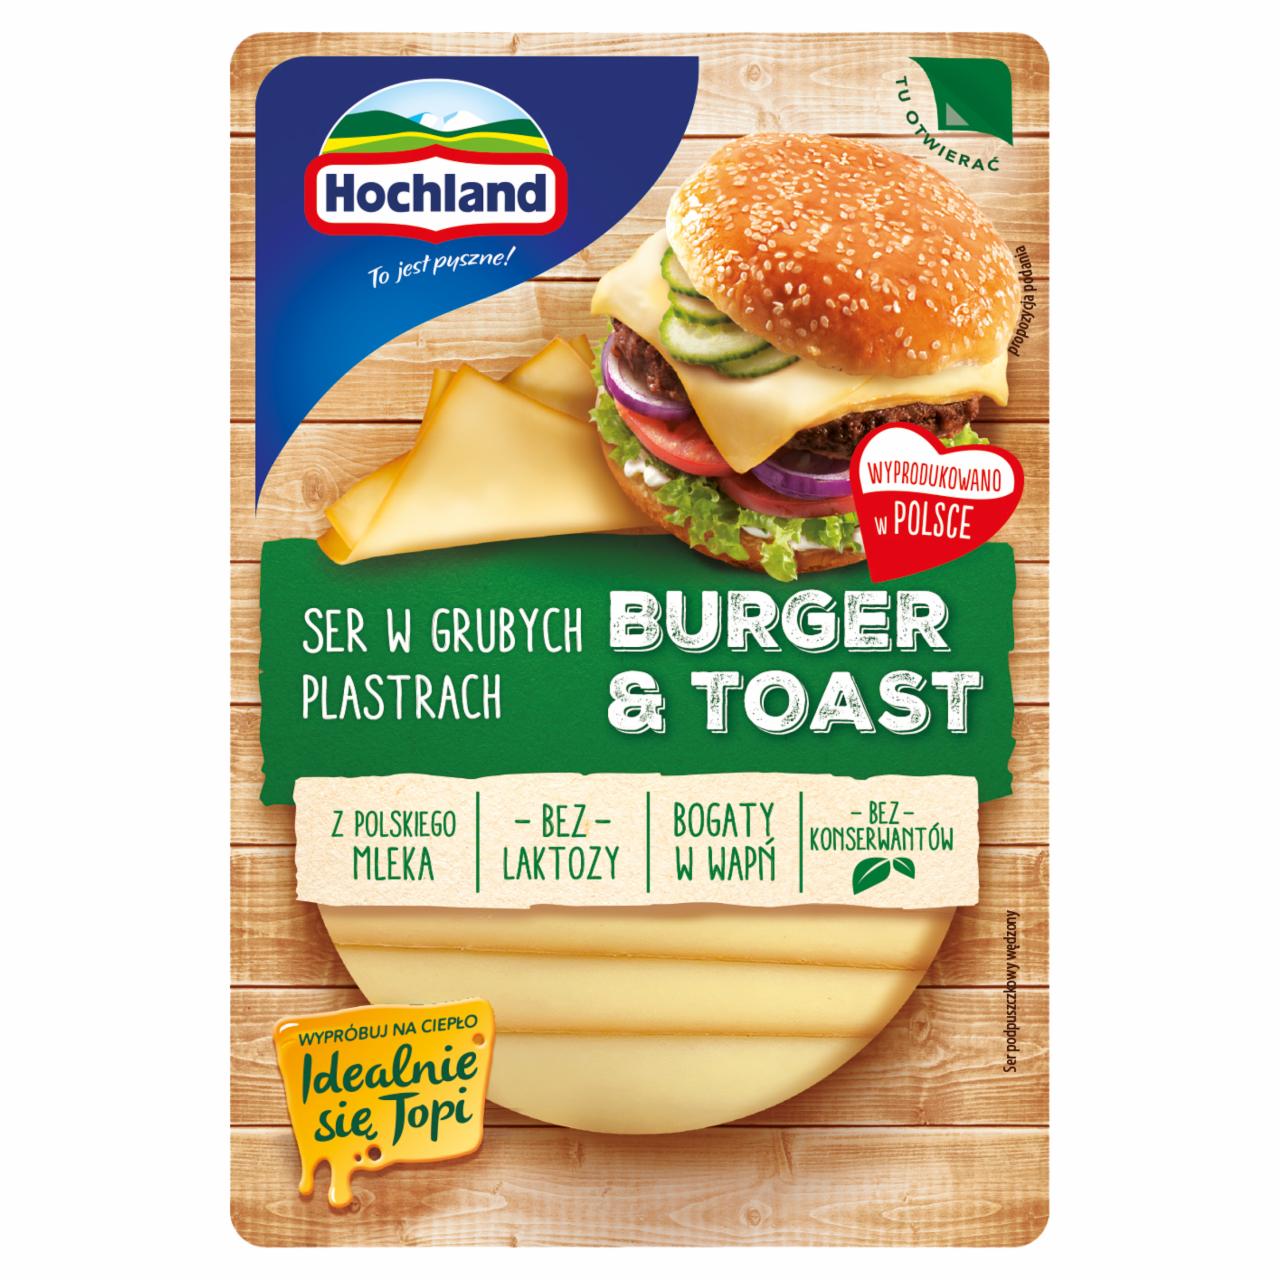 Zdjęcia - Hochland Burger & Toast Ser w grubych plastrach 135 g